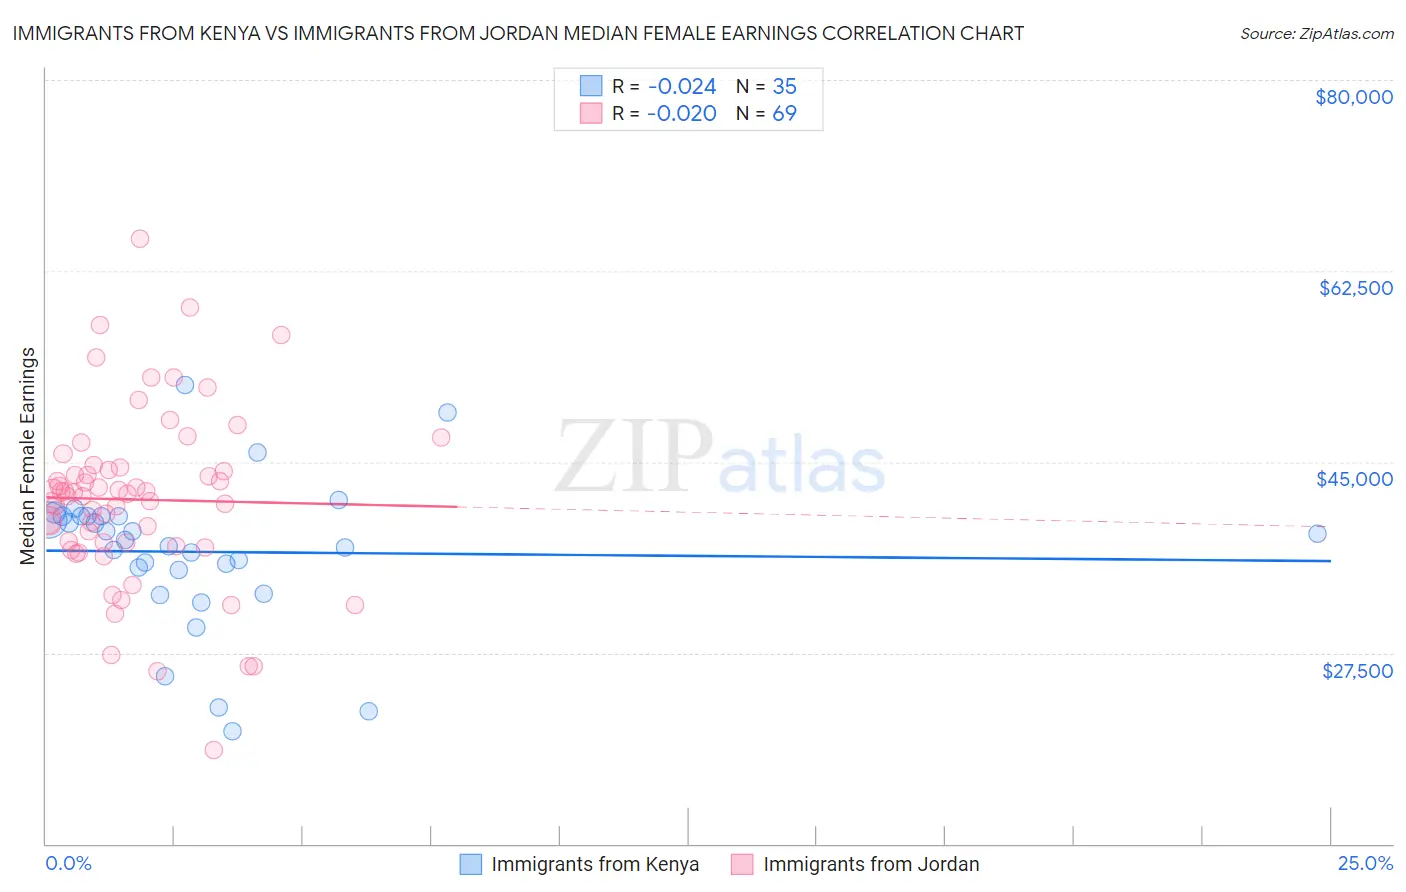 Immigrants from Kenya vs Immigrants from Jordan Median Female Earnings